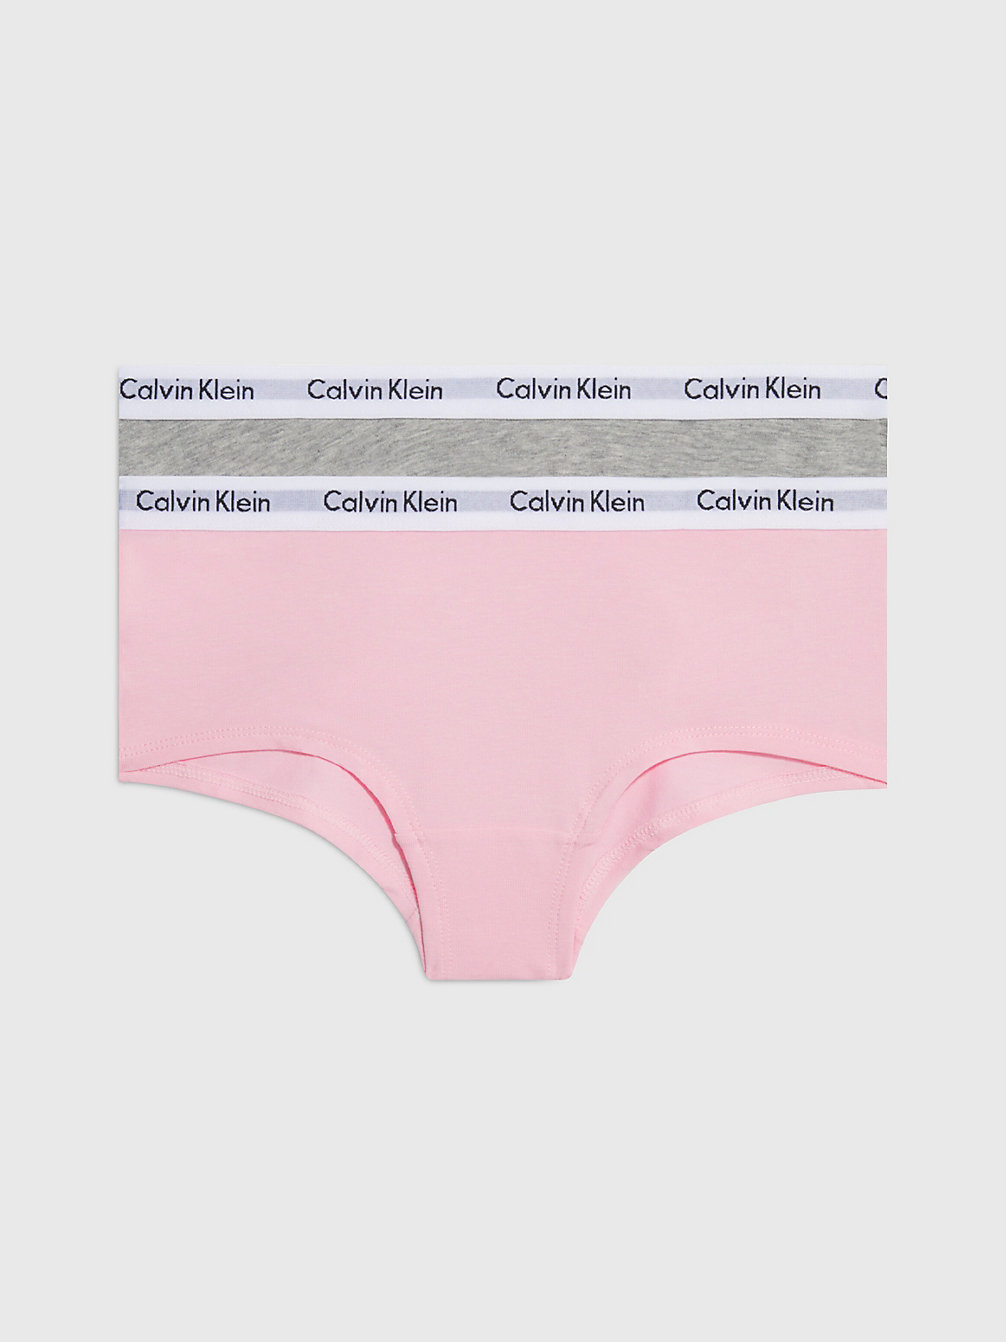 GREY HTR/UNIQUE > 2-Pack Meisjeshipsters - Modern Cotton > undefined meisjes - Calvin Klein